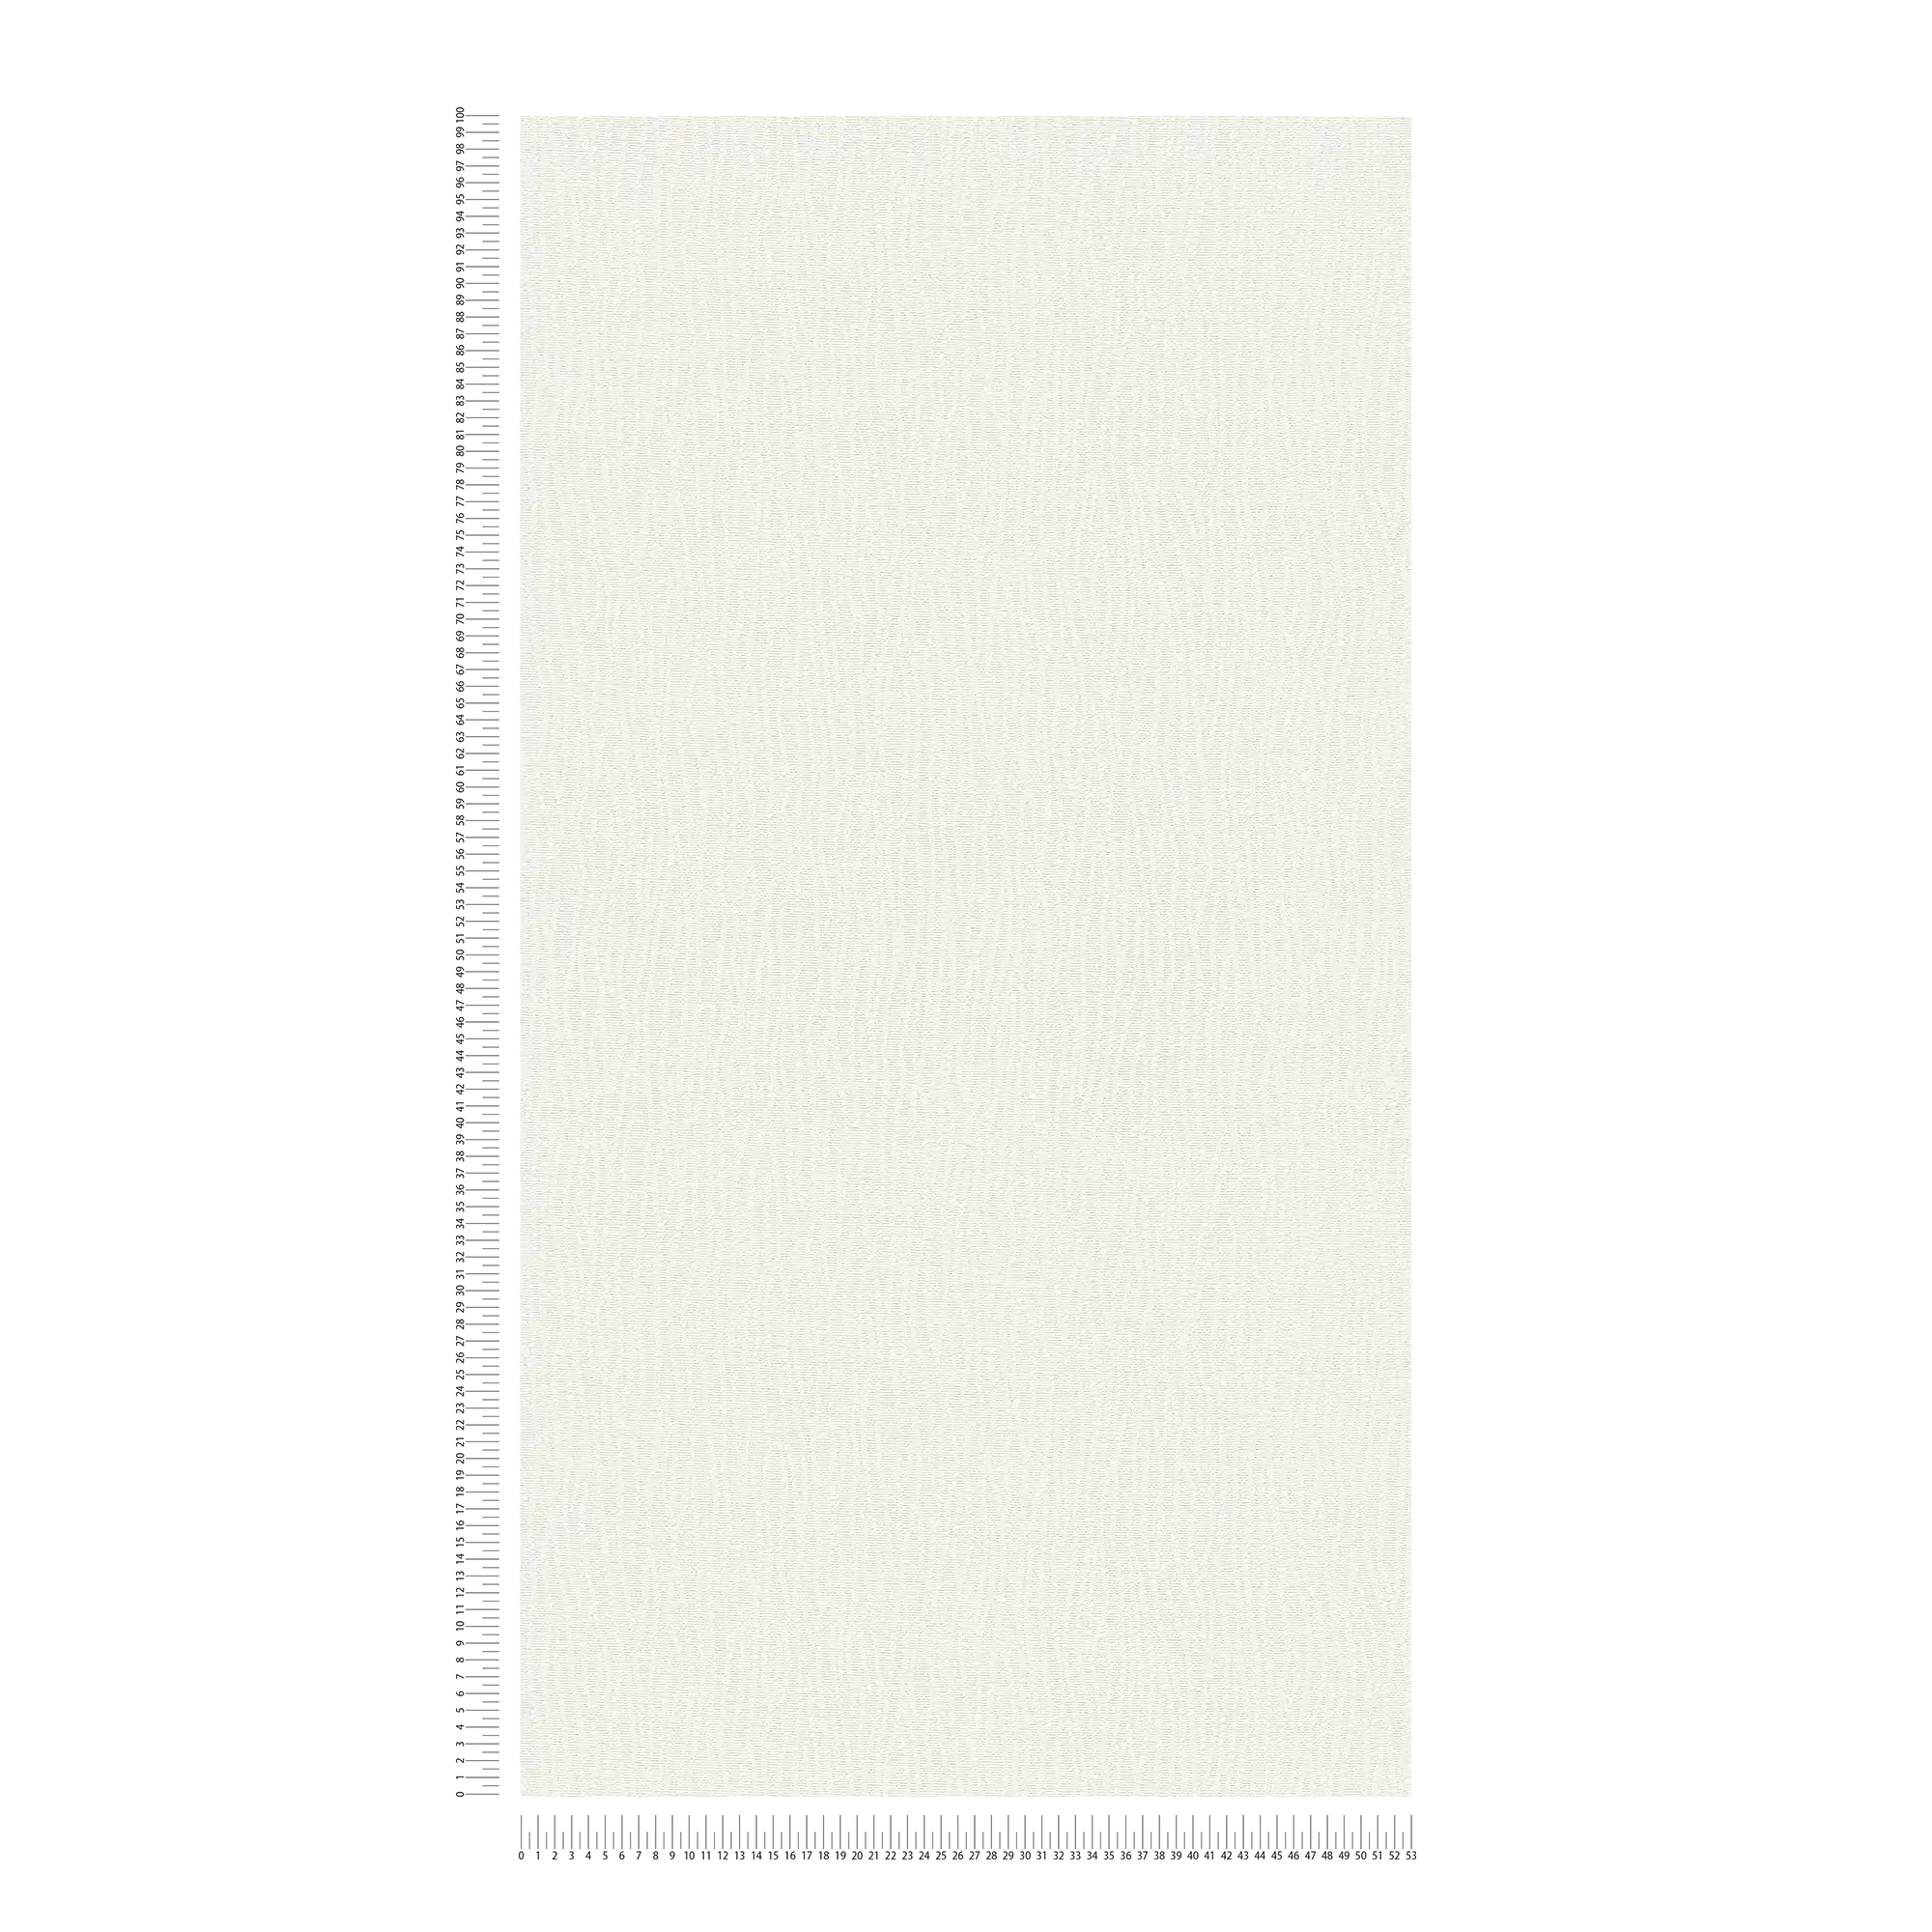             Carta da parati bianca con motivo strutturato a linee ondulate
        